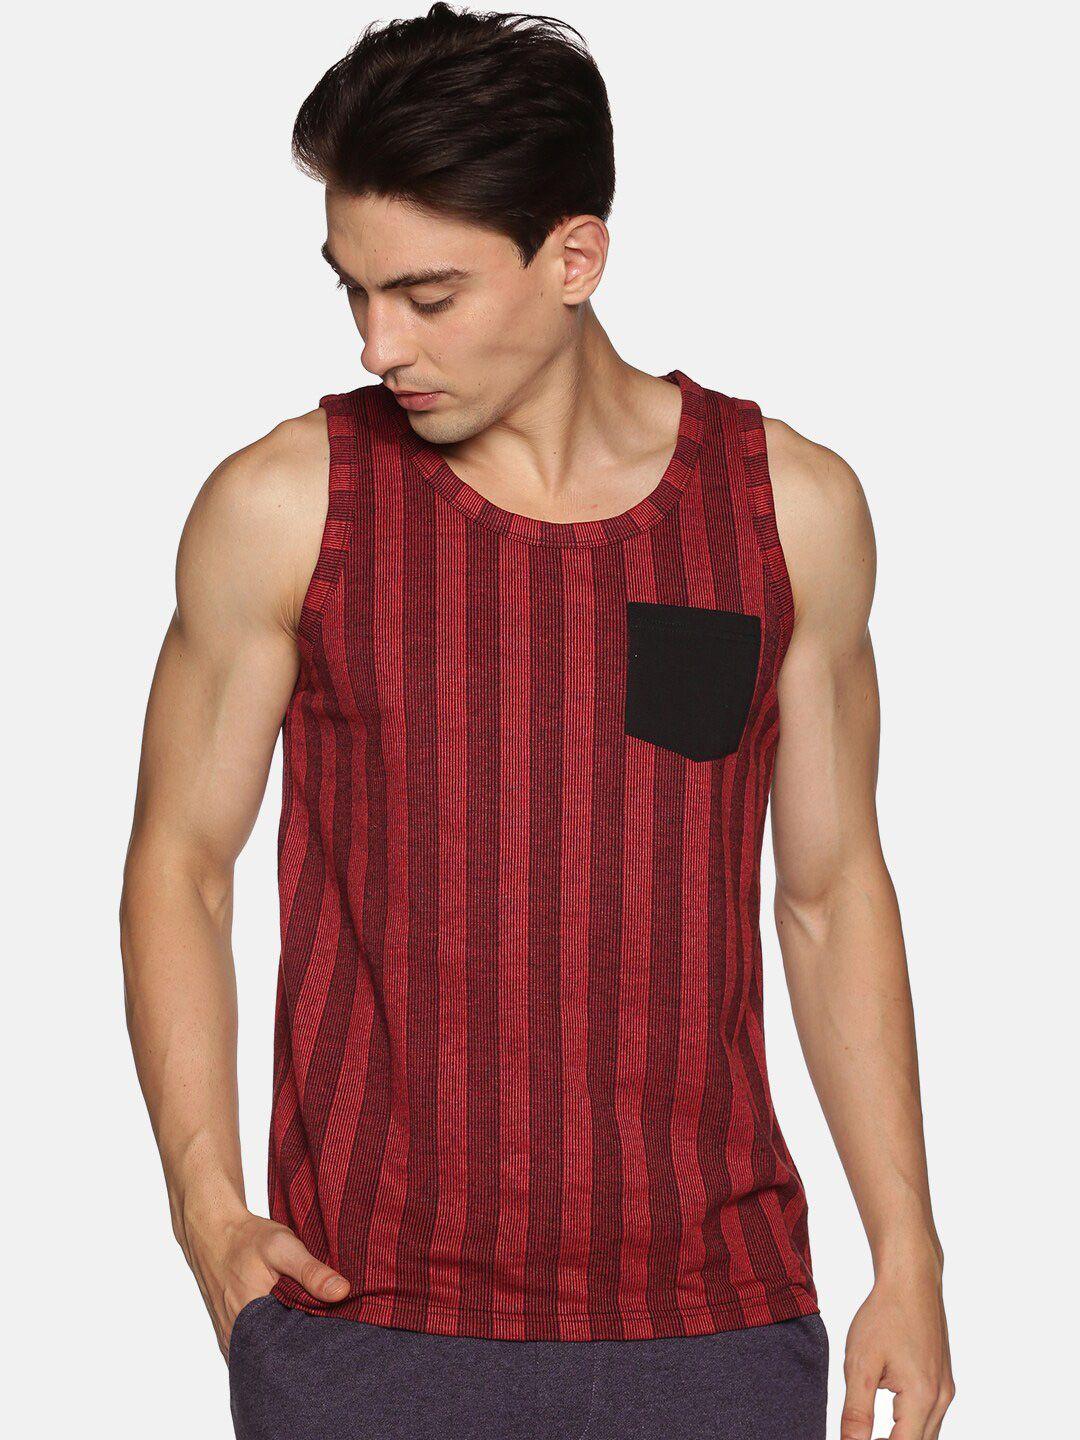 urgear men red & maroon striped pockets training or gym t-shirt